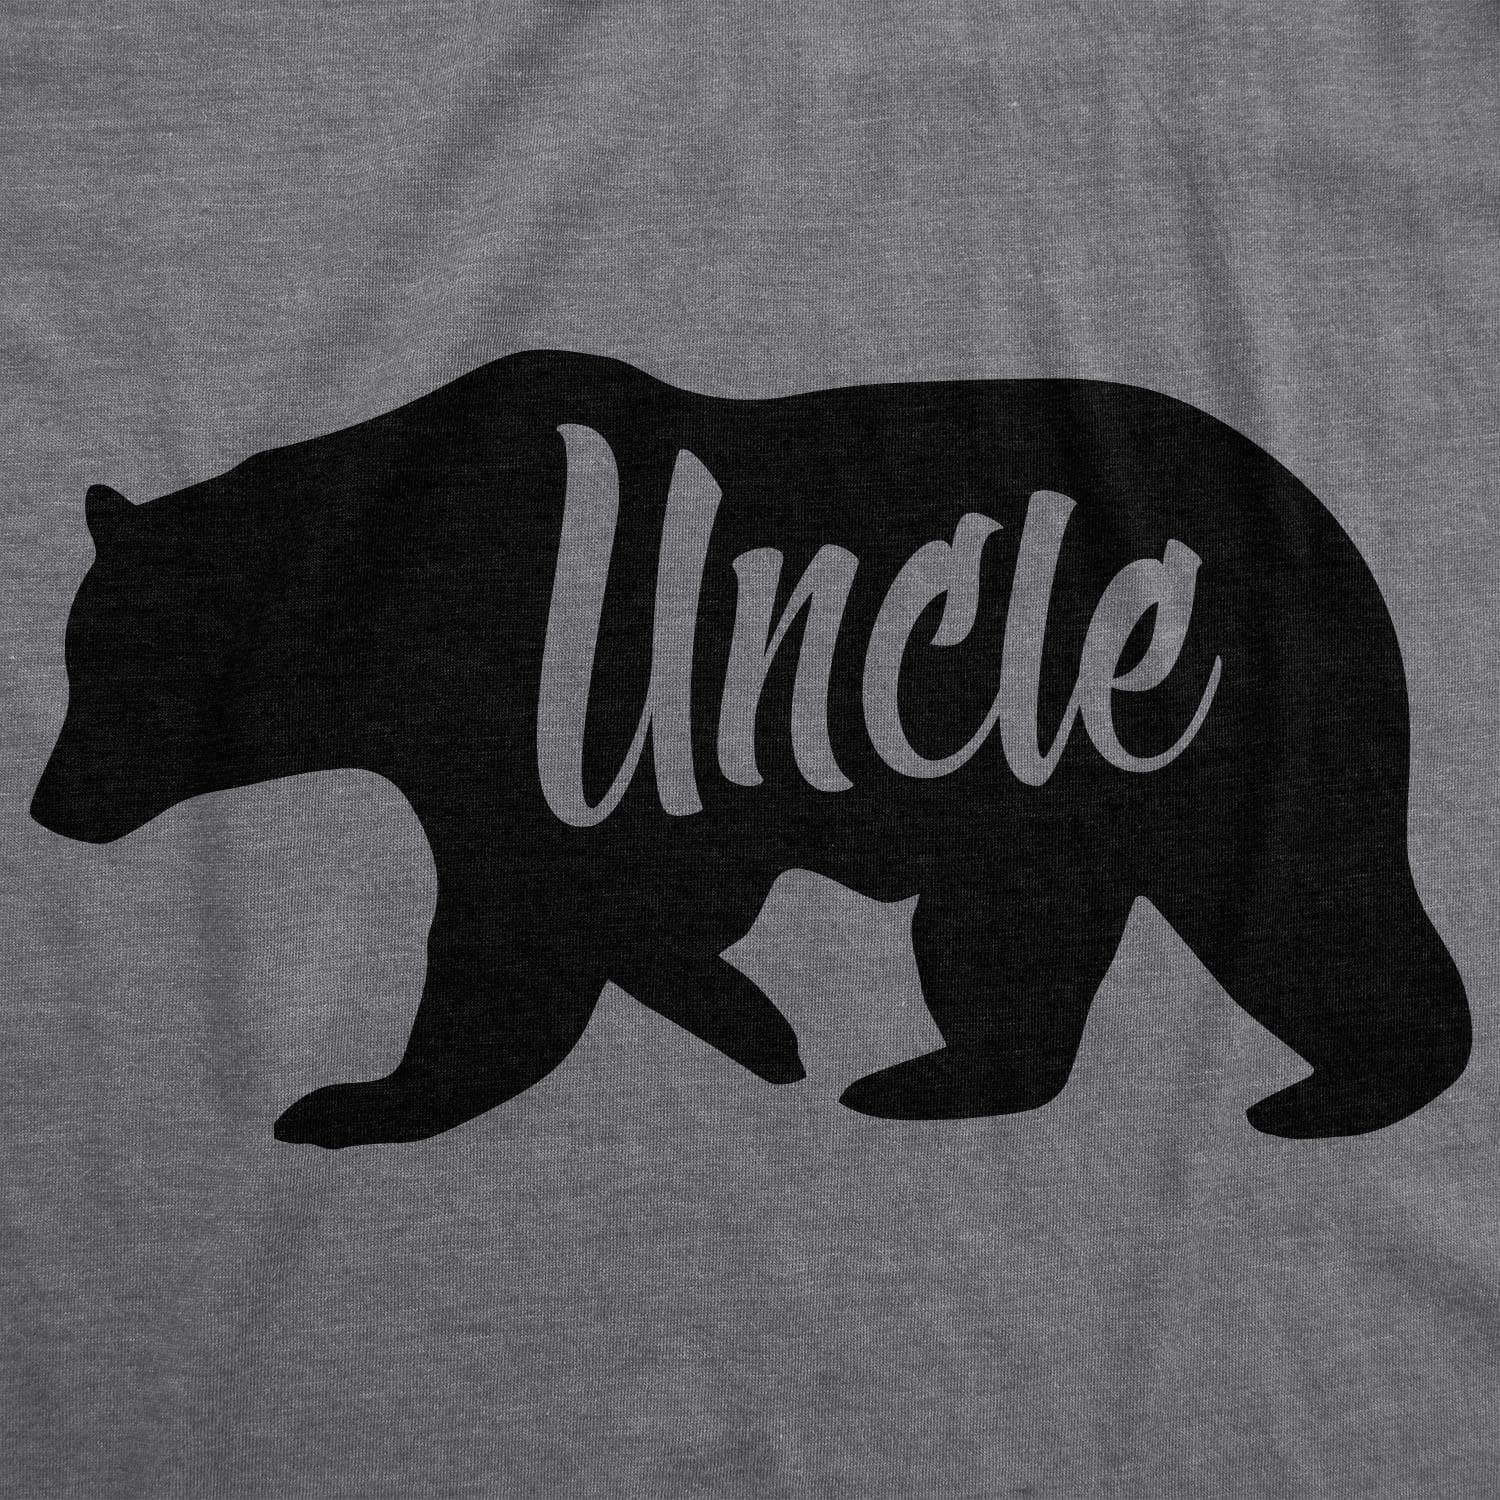 Uncle Bear Men's Tshirt  -  Crazy Dog T-Shirts